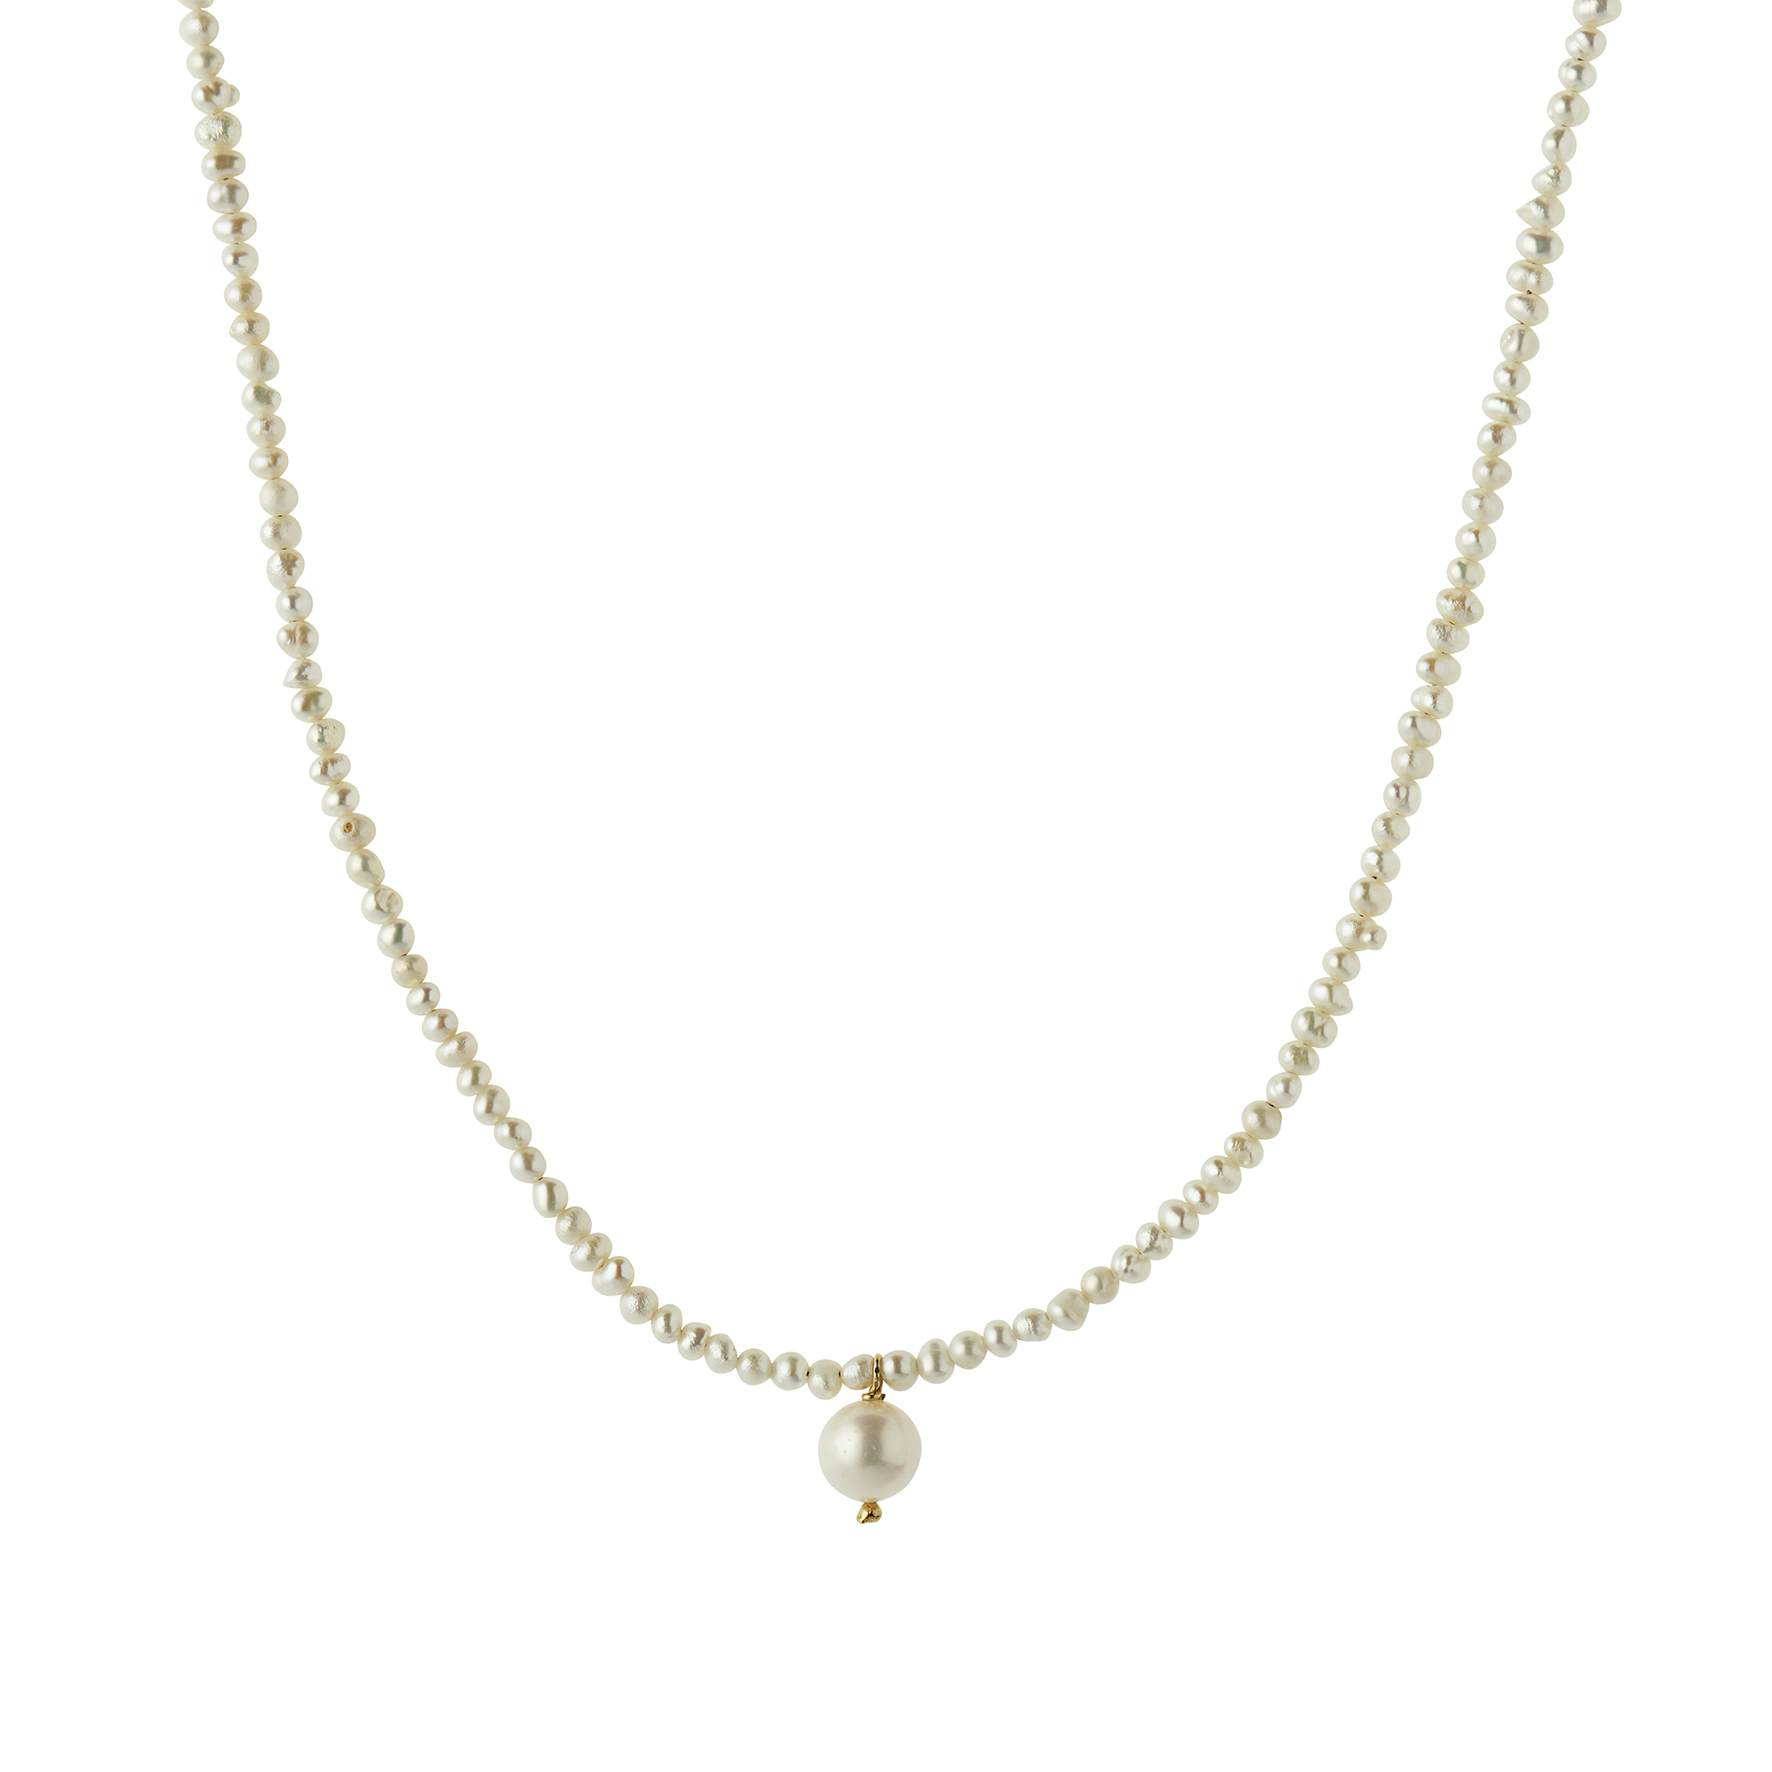 Heavenly Pearl Dream Necklace Classy från STINE A Jewelry i Förgyllt-Silver Sterling 925